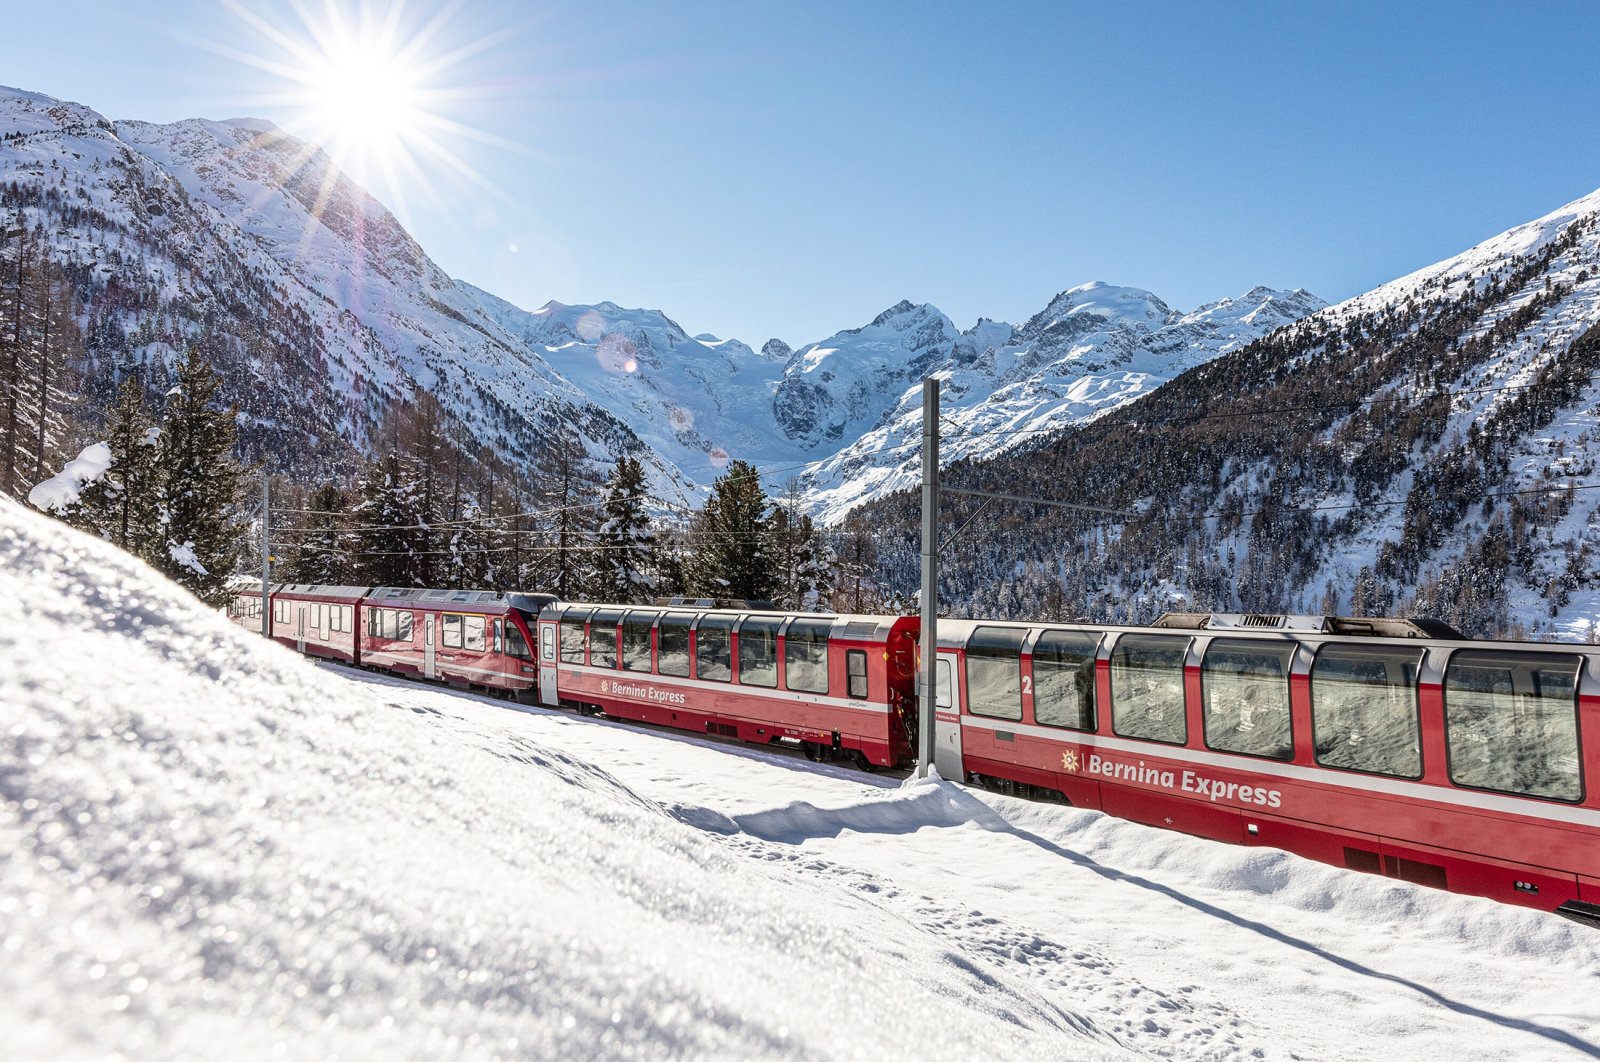 The Bernina Express railway makes its way up the snow-covered Swiss mountains. (Rhatische Bahn via dpa)